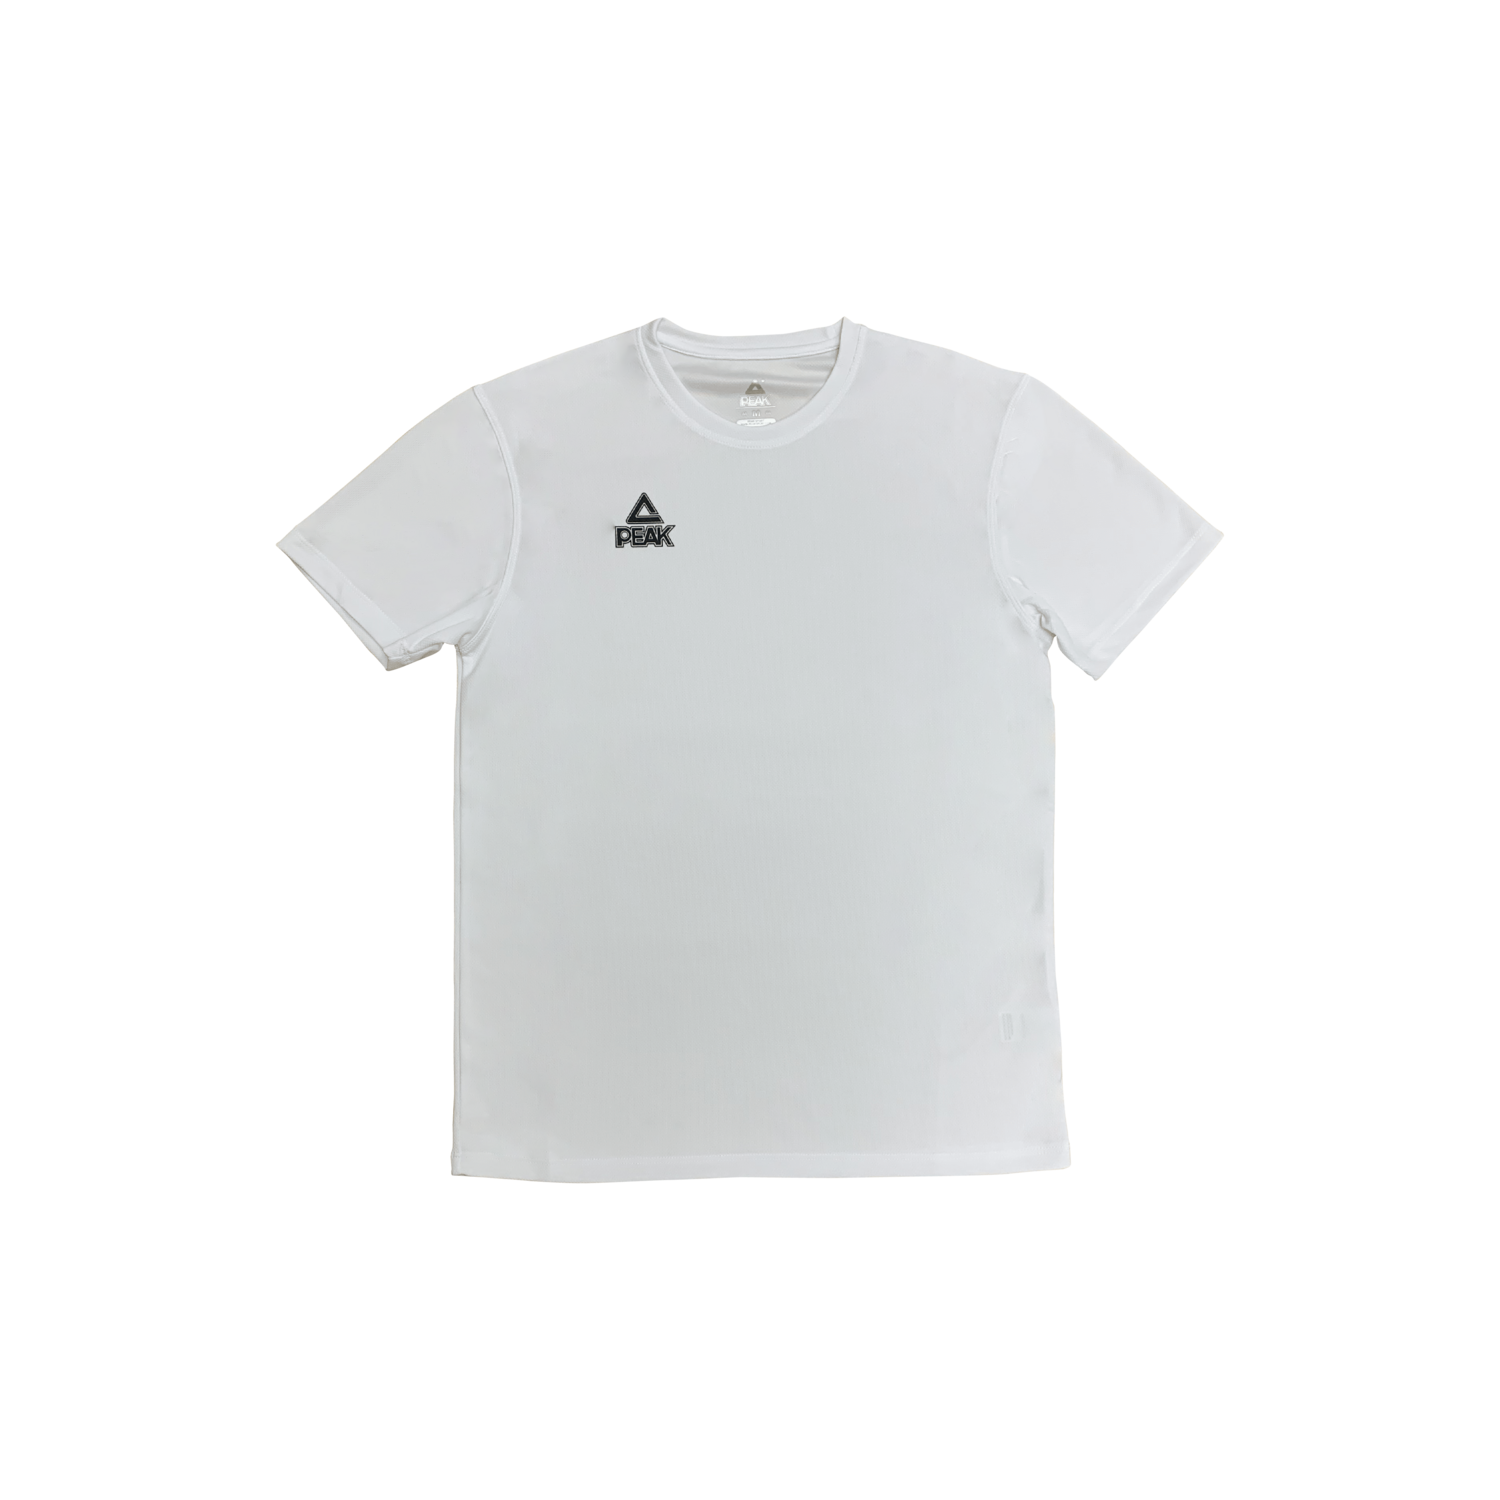 PEAK Small Logo T-Shirt - White